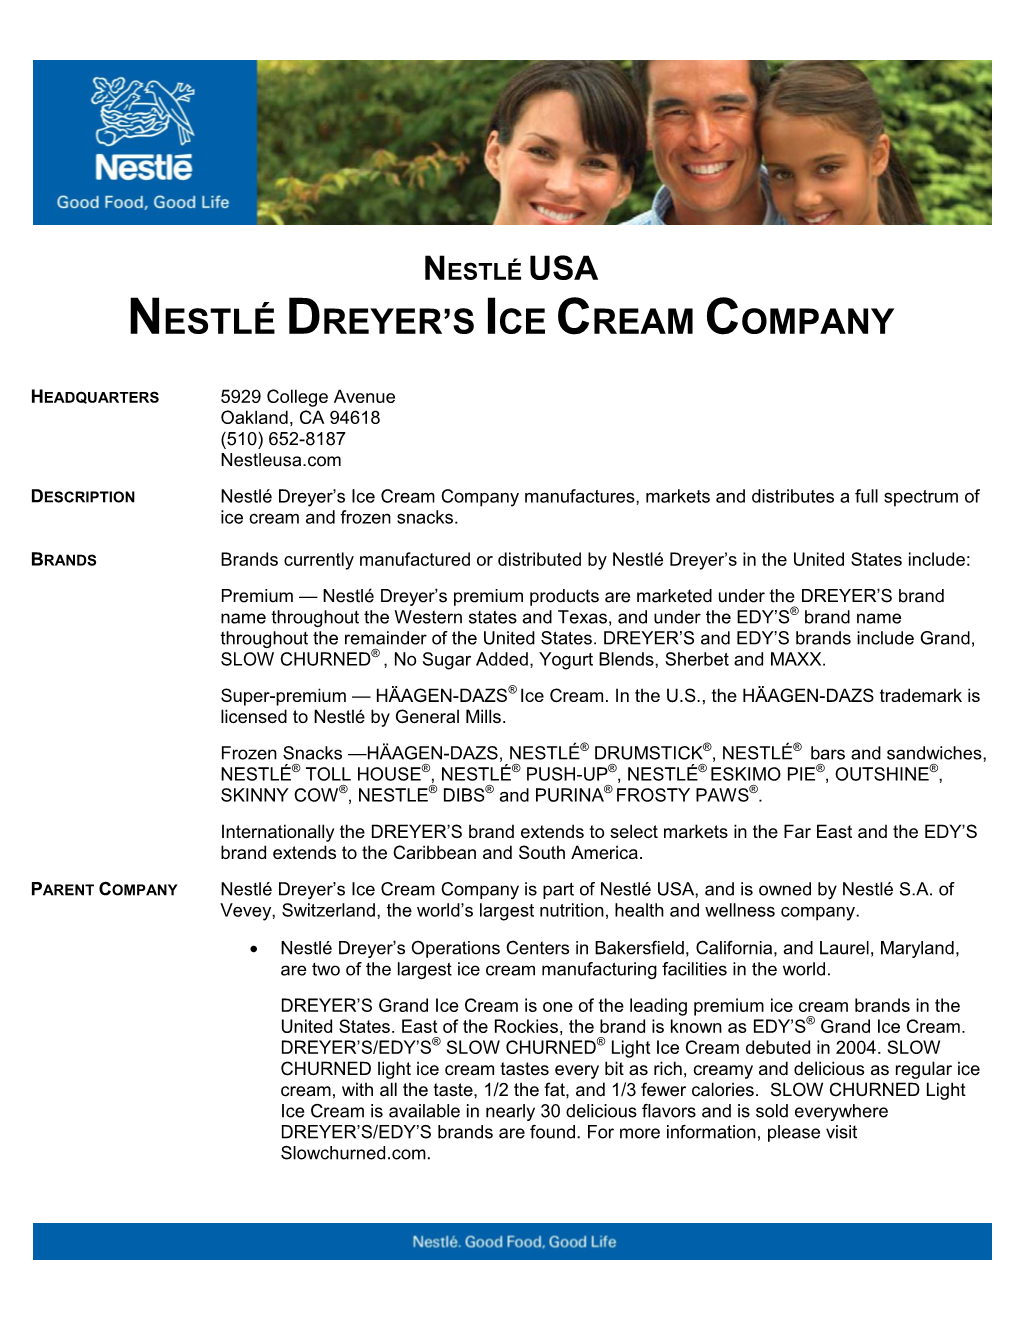 Nestlé Dreyer's Ice Cream Company